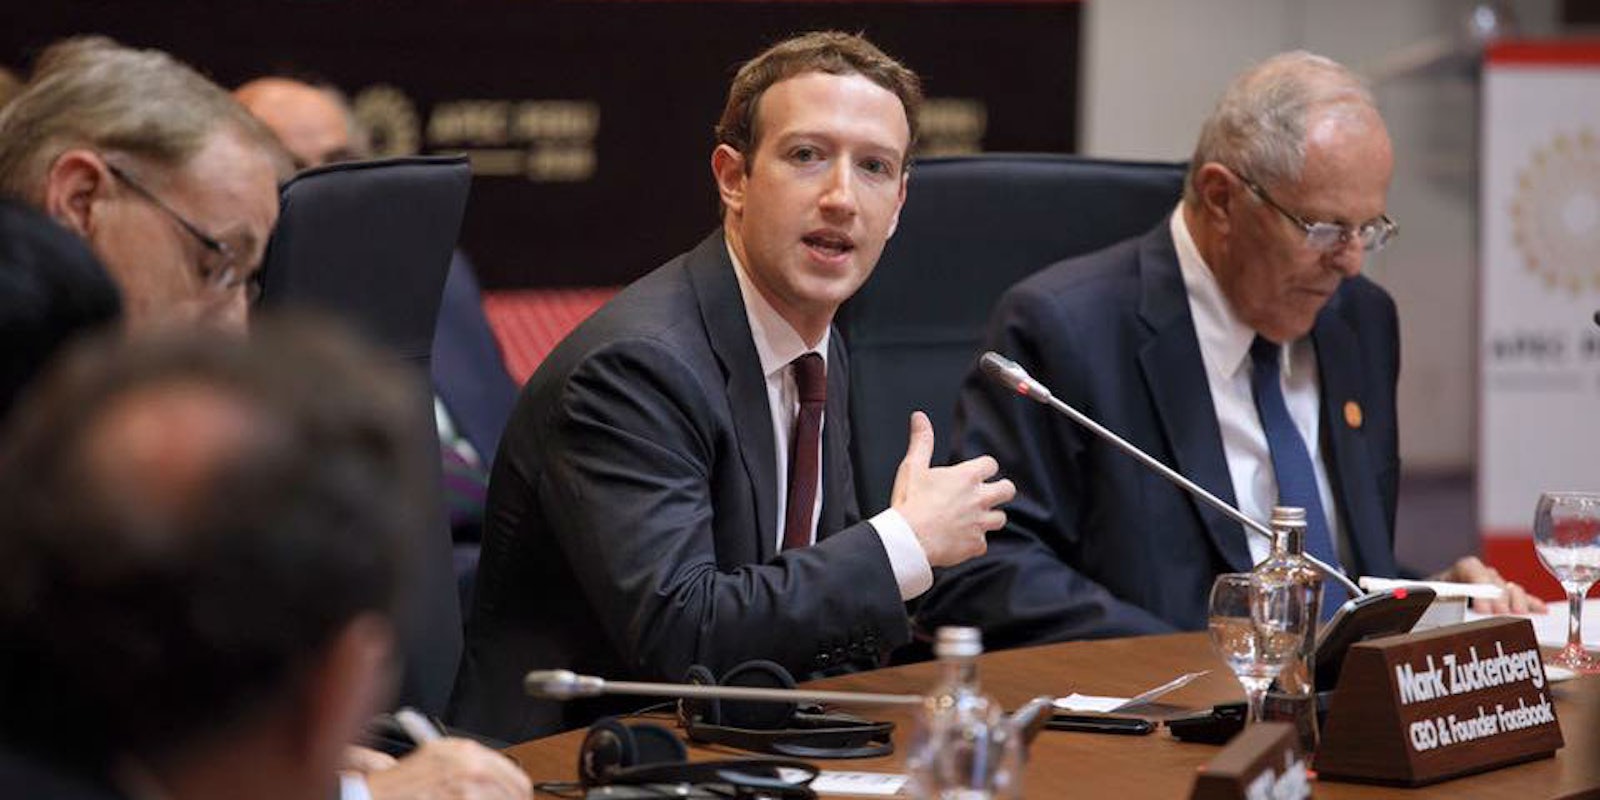 How to Watch Mark Zuckerberg's Testimony Before Congress